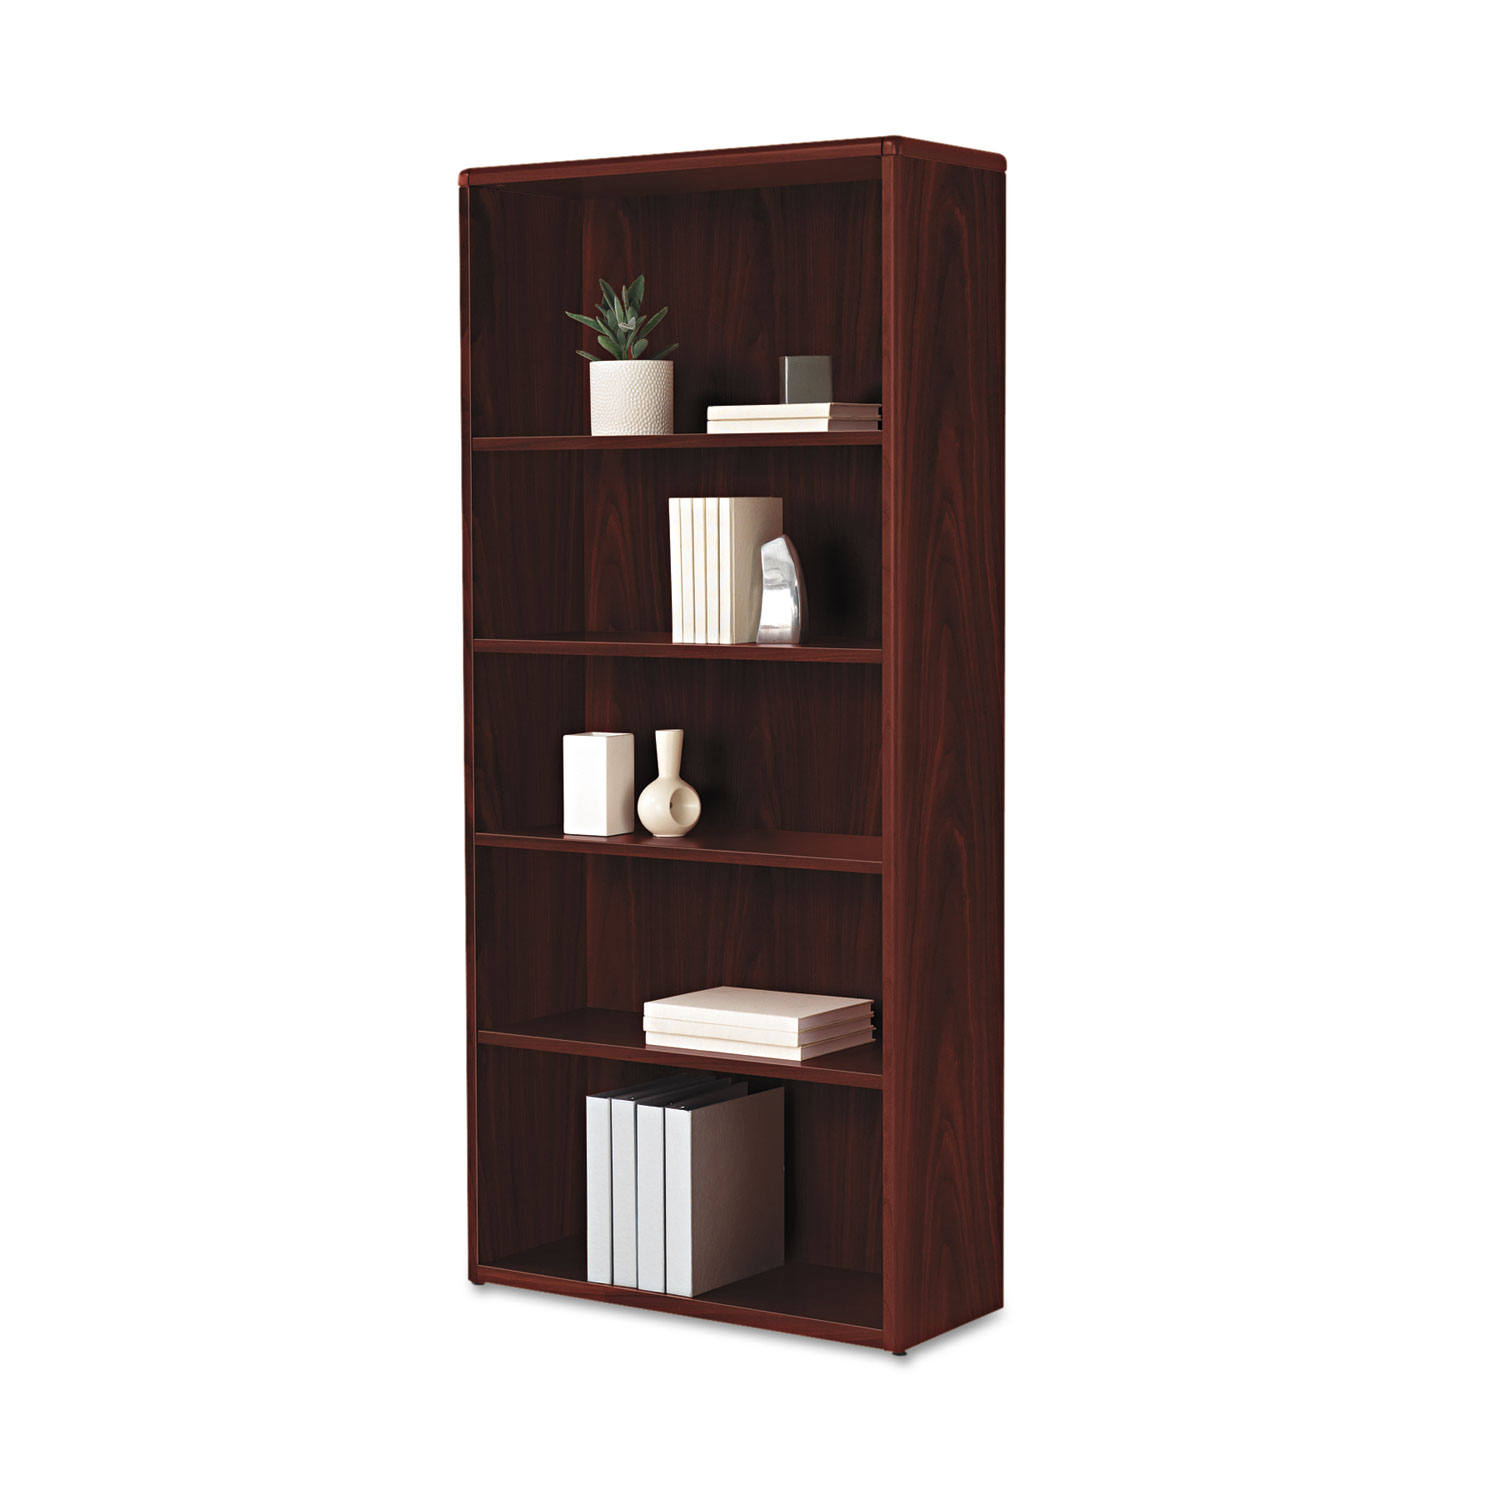 10700 Series Wood Bookcase, 5 Shelf/3 Adjust,32 3/8 x 13 1/8 x 71, Mahogany